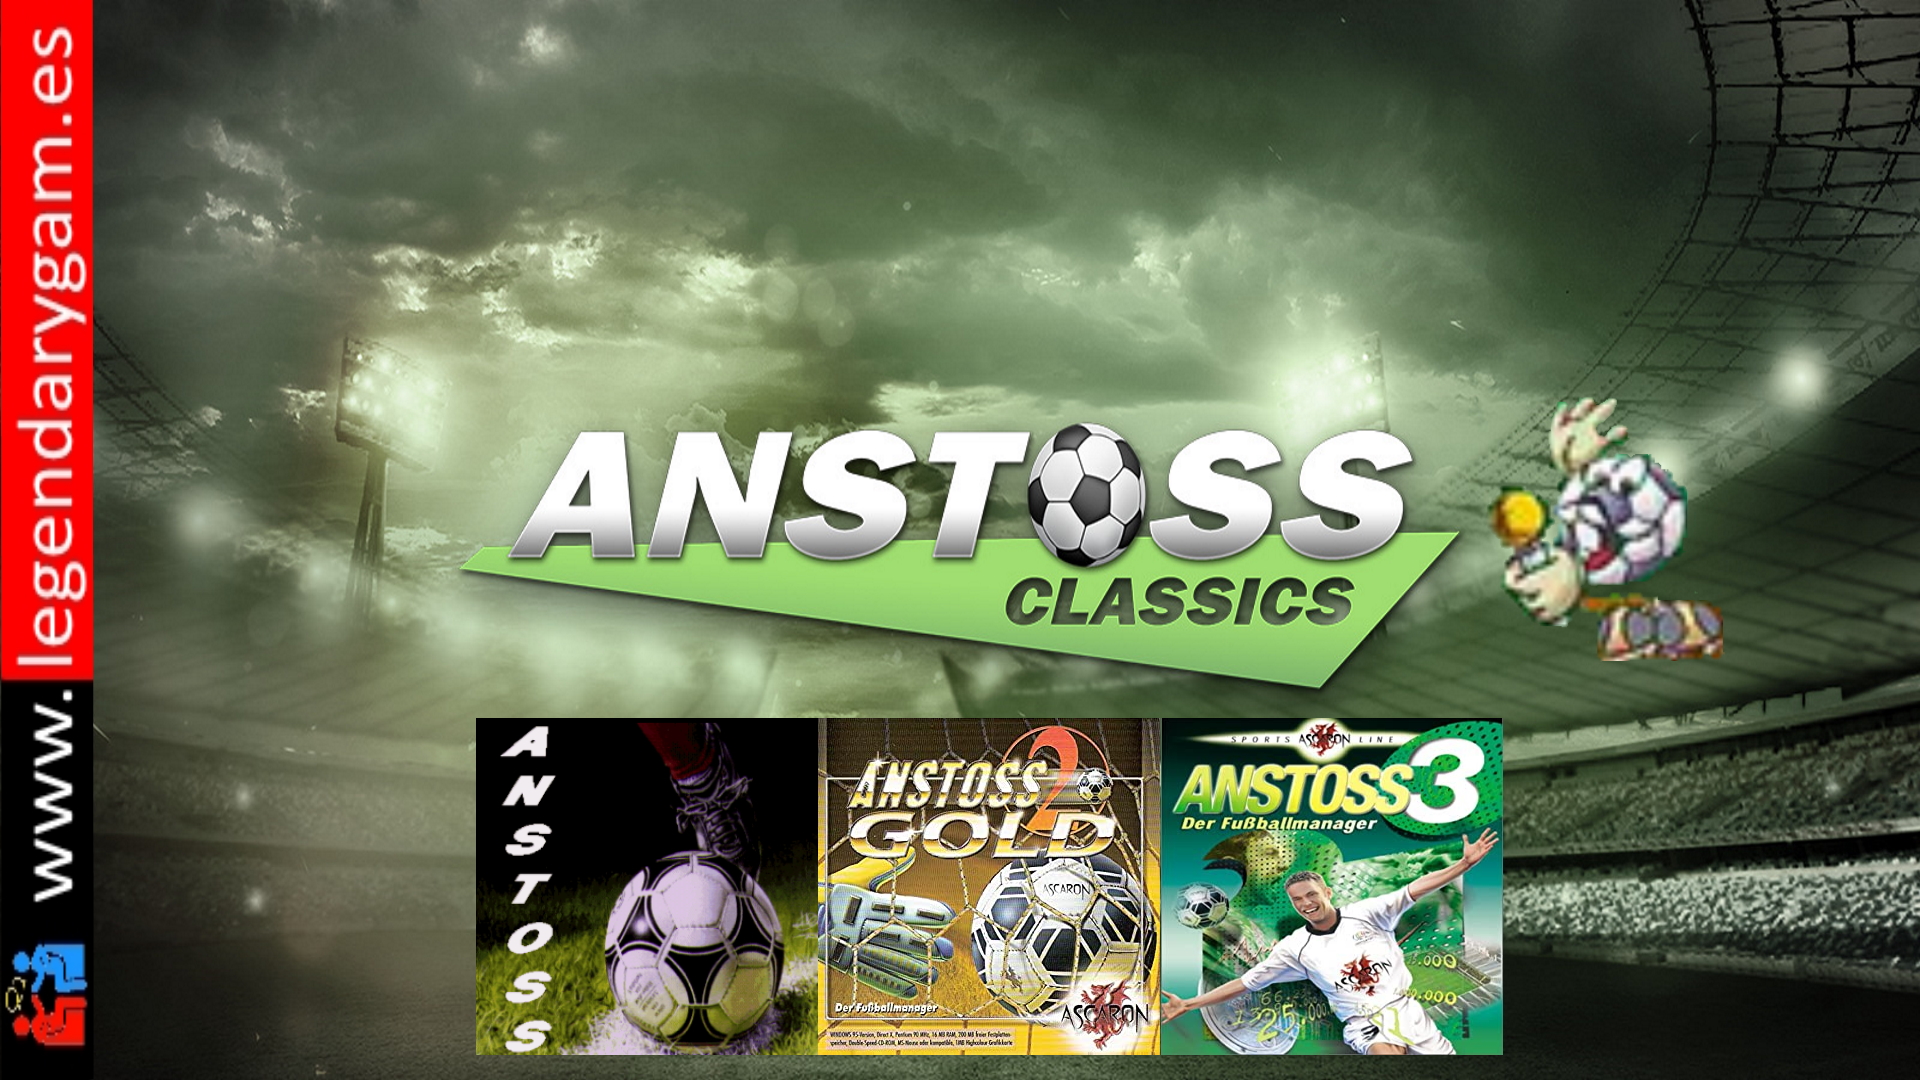 ANSTOSS - Der FUSSBALLMANAGER, Release im Oktober?